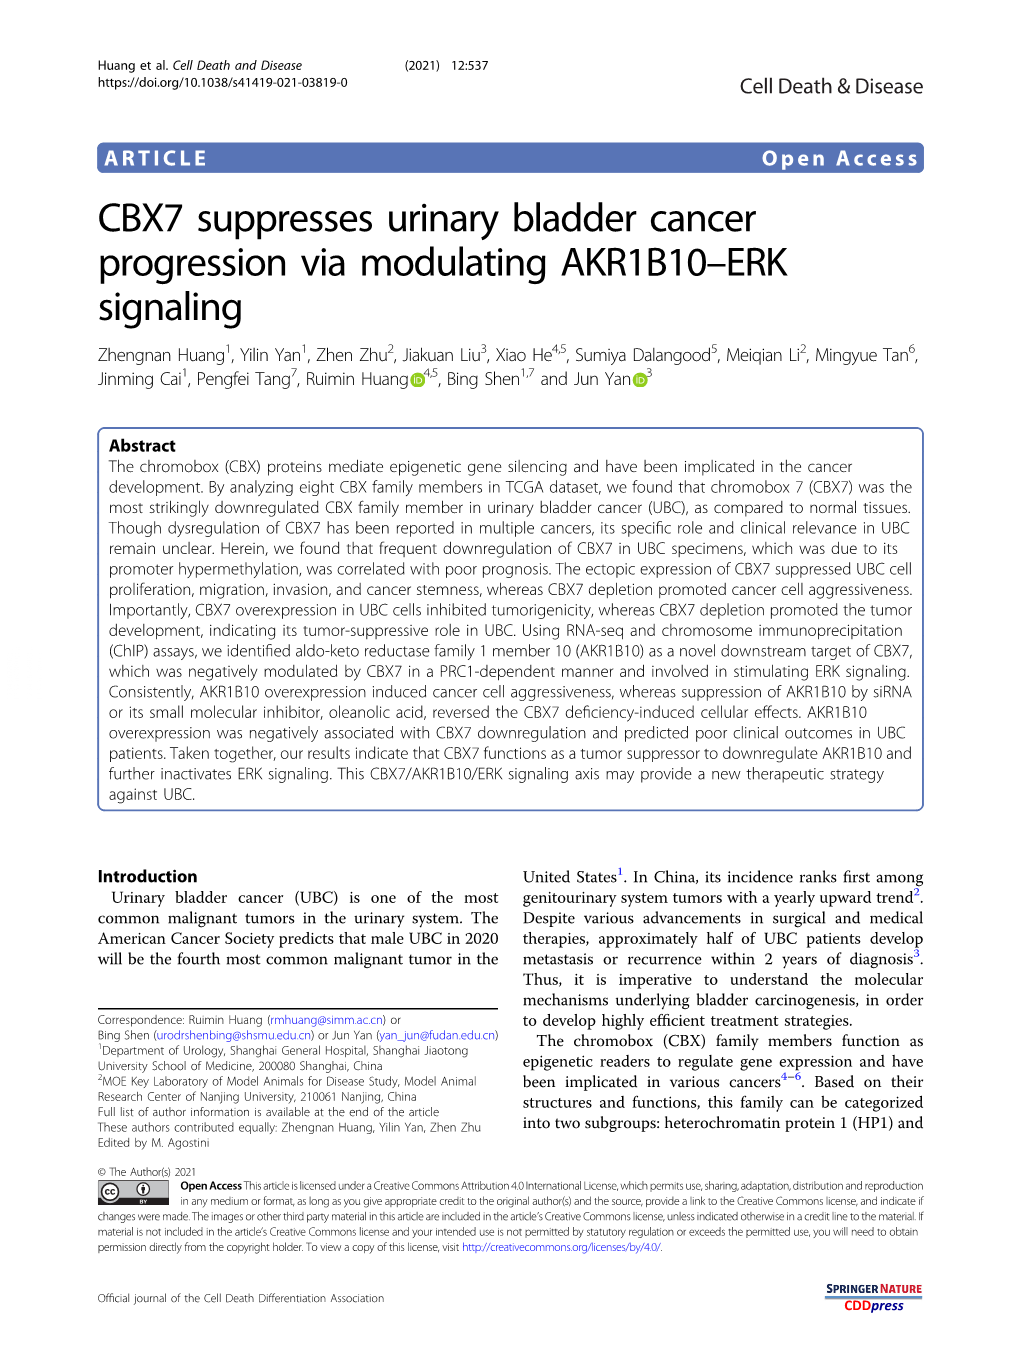 CBX7 Suppresses Urinary Bladder Cancer Progression Via Modulating